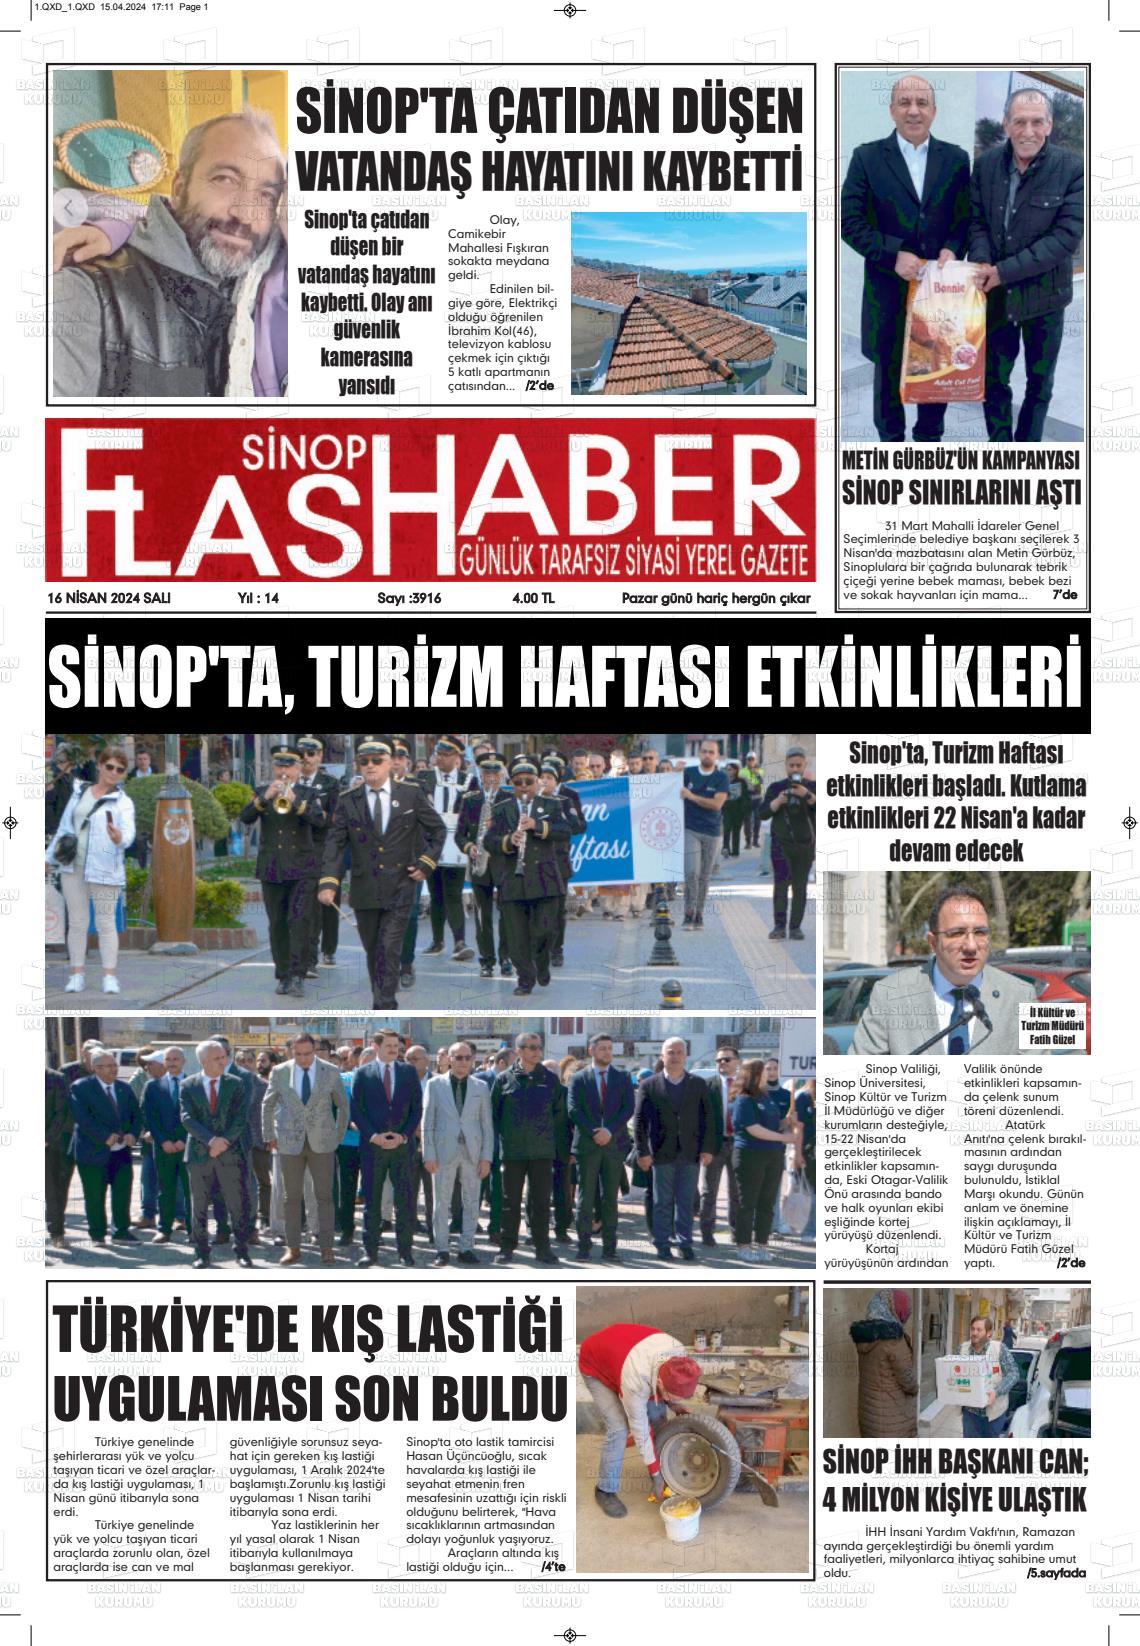 17 Nisan 2024 Sinop Flaş Haber Gazete Manşeti